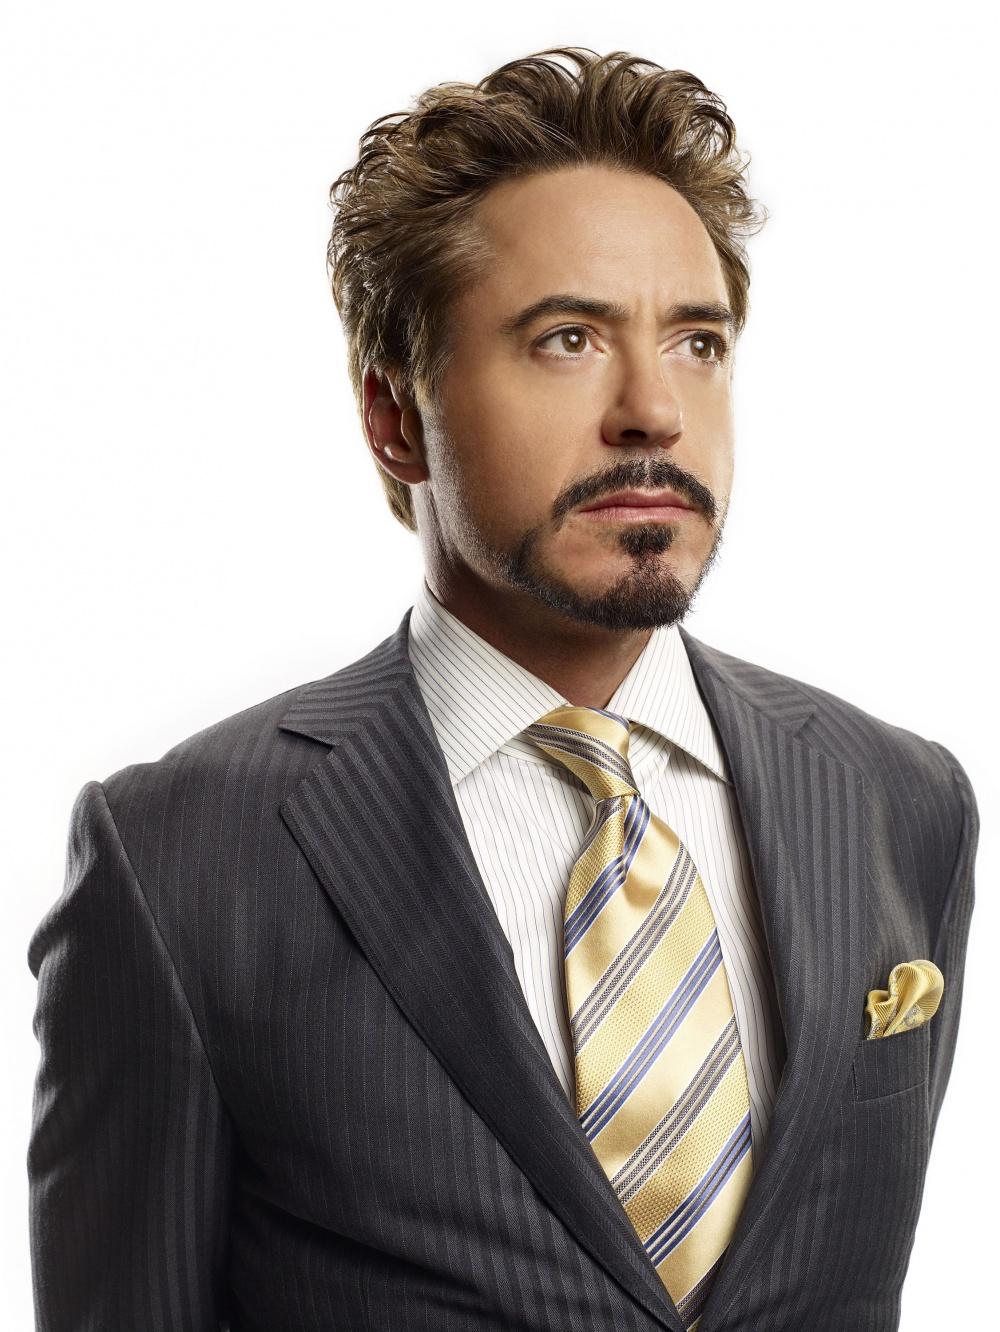 Picture of Tony Stark beard style, Great Iron Man pics